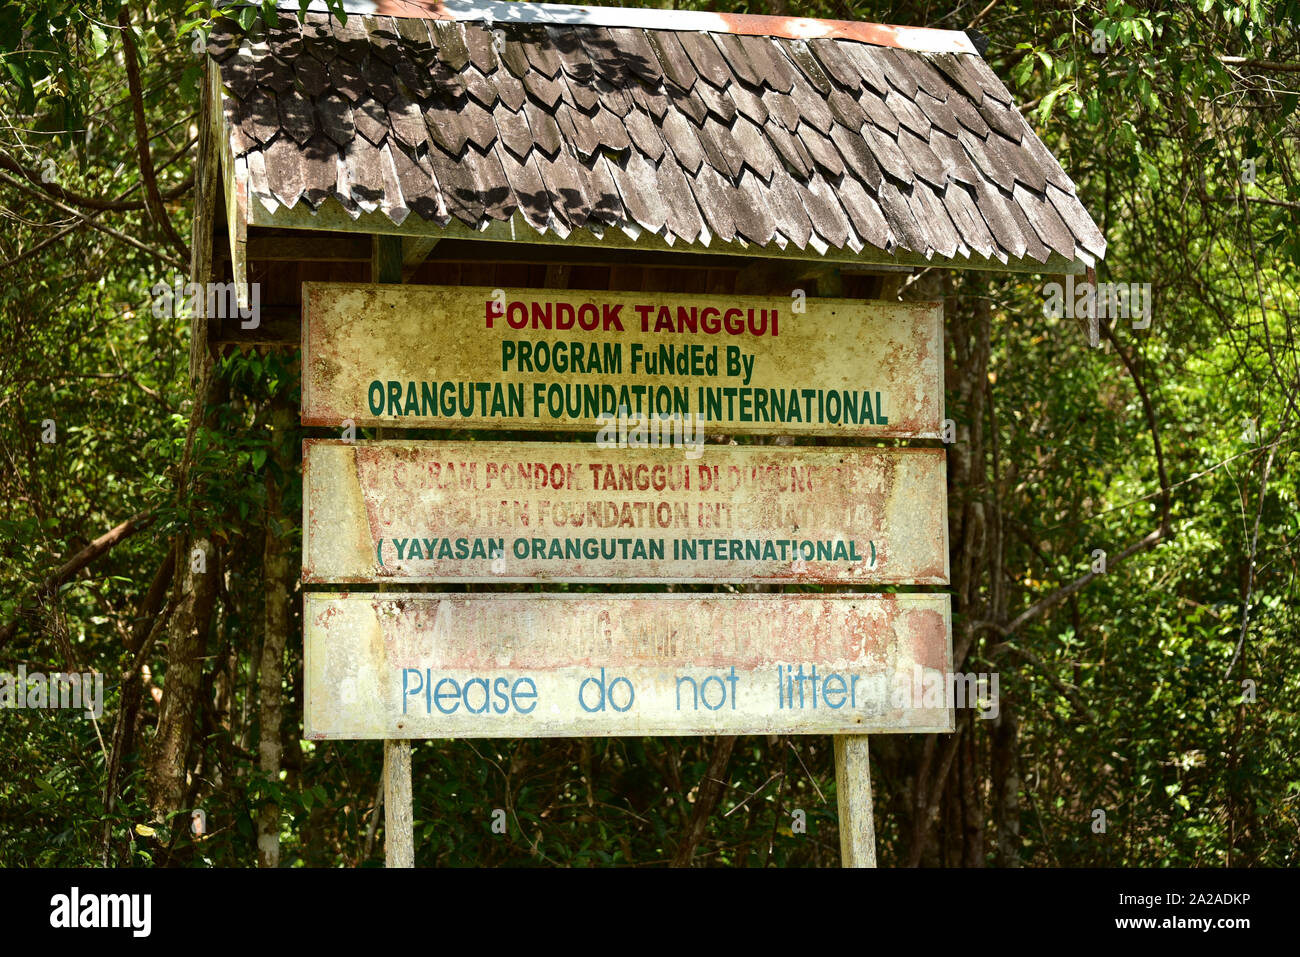 Pondok Tanggui firmar al centro de rehabilitación de orangutanes. El parque nacional Tanjung Puting. Indonesia Foto de stock